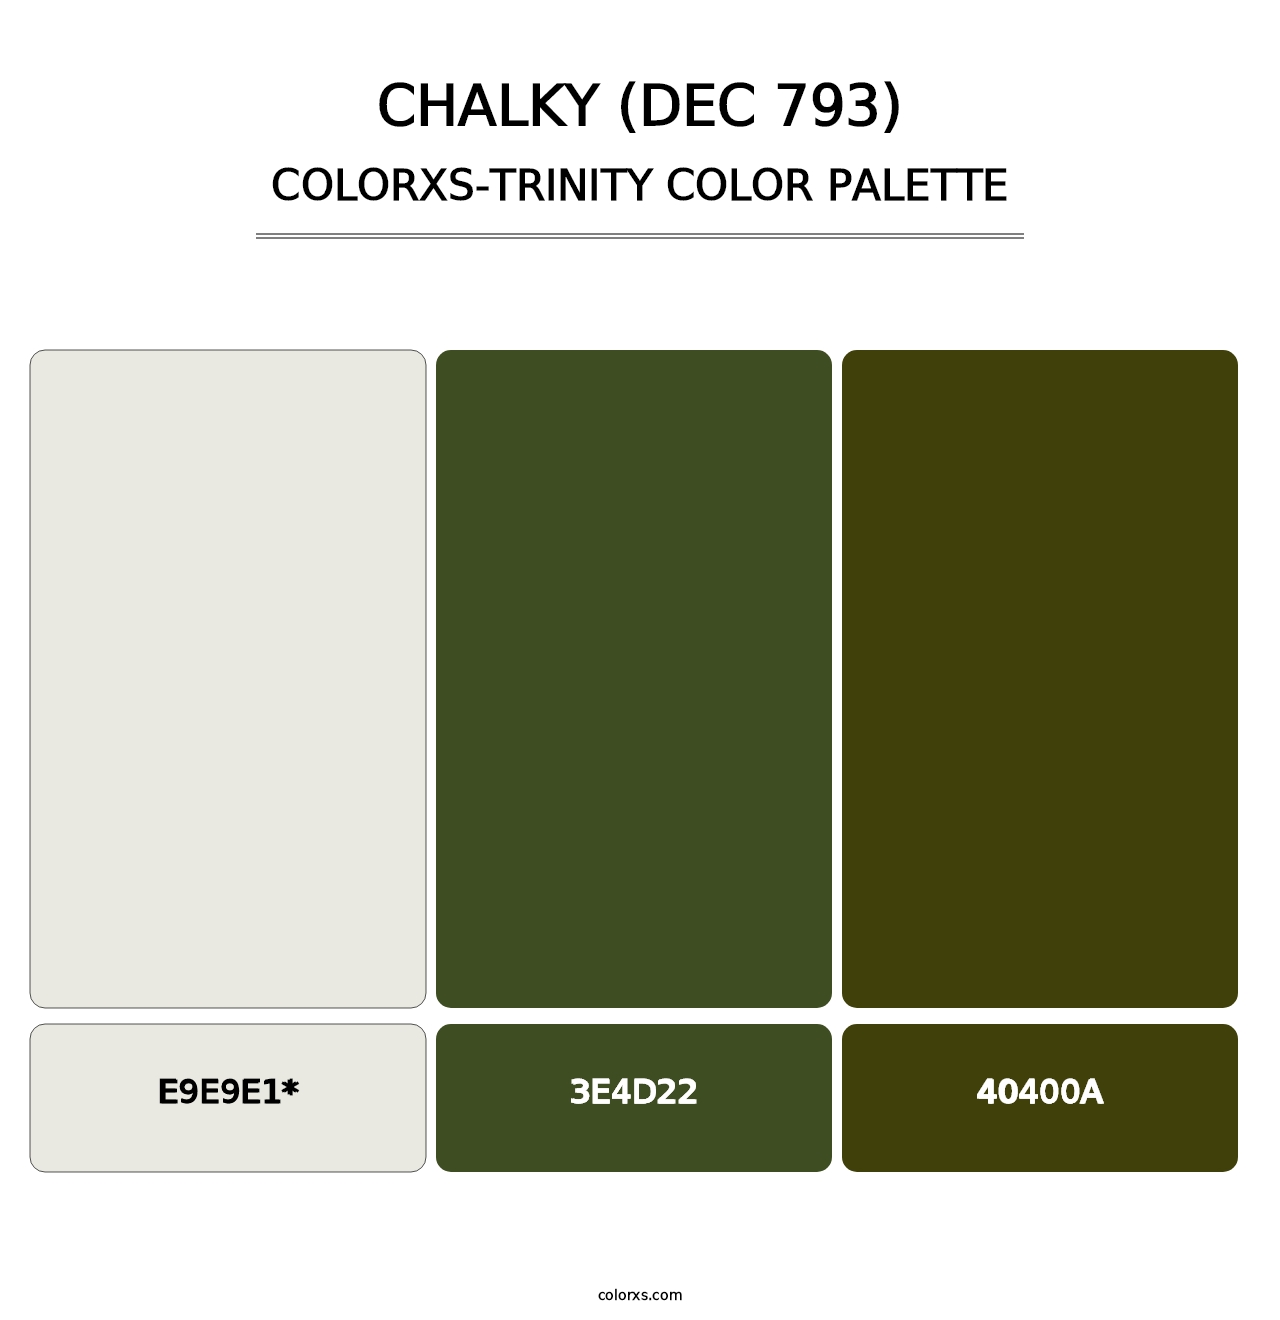 Chalky (DEC 793) - Colorxs Trinity Palette